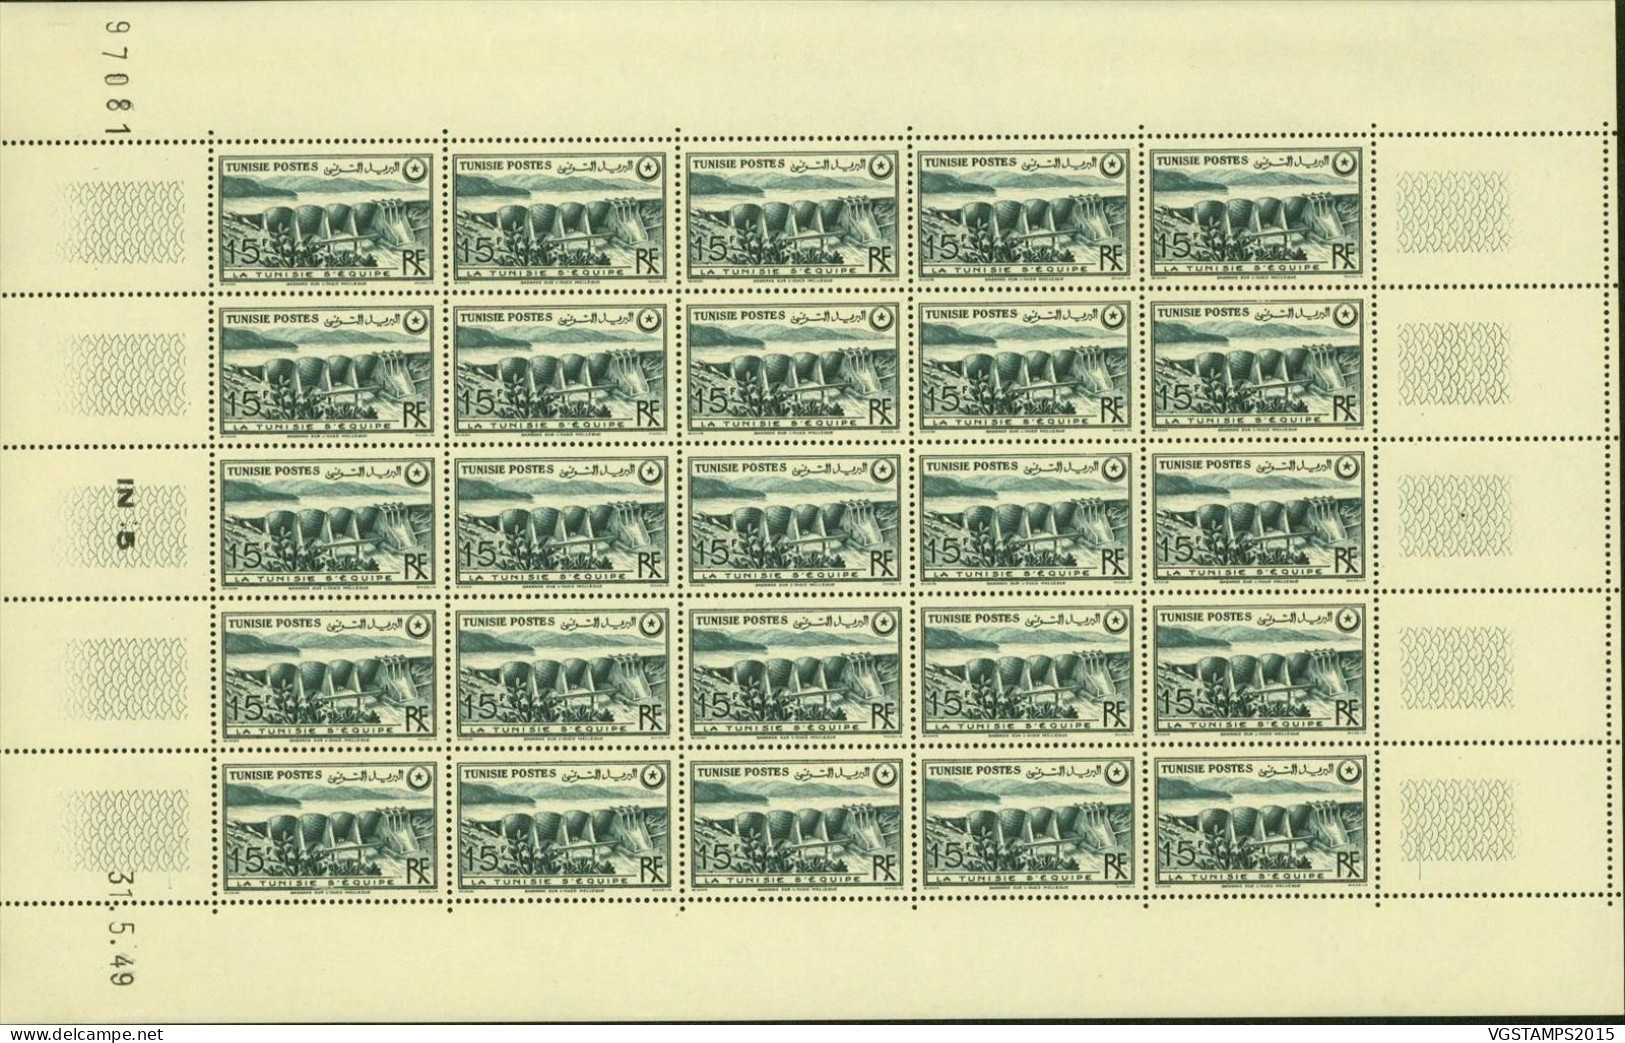 Tunisie 1949 - Colonie Française - Timbres Neufs. Yver Nr.: 330. Feuille De 25 Avec Coin Date: 31/5/49.. (EB) AR-02719 - Unused Stamps